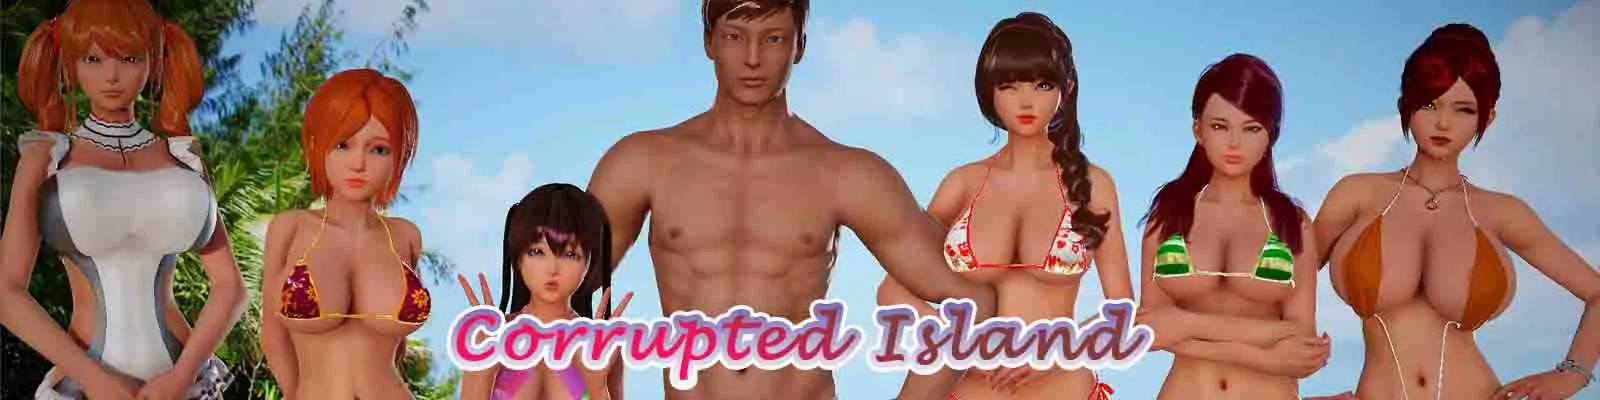 Korrupte eiland 3d seks spel, porn spel, xxx spel